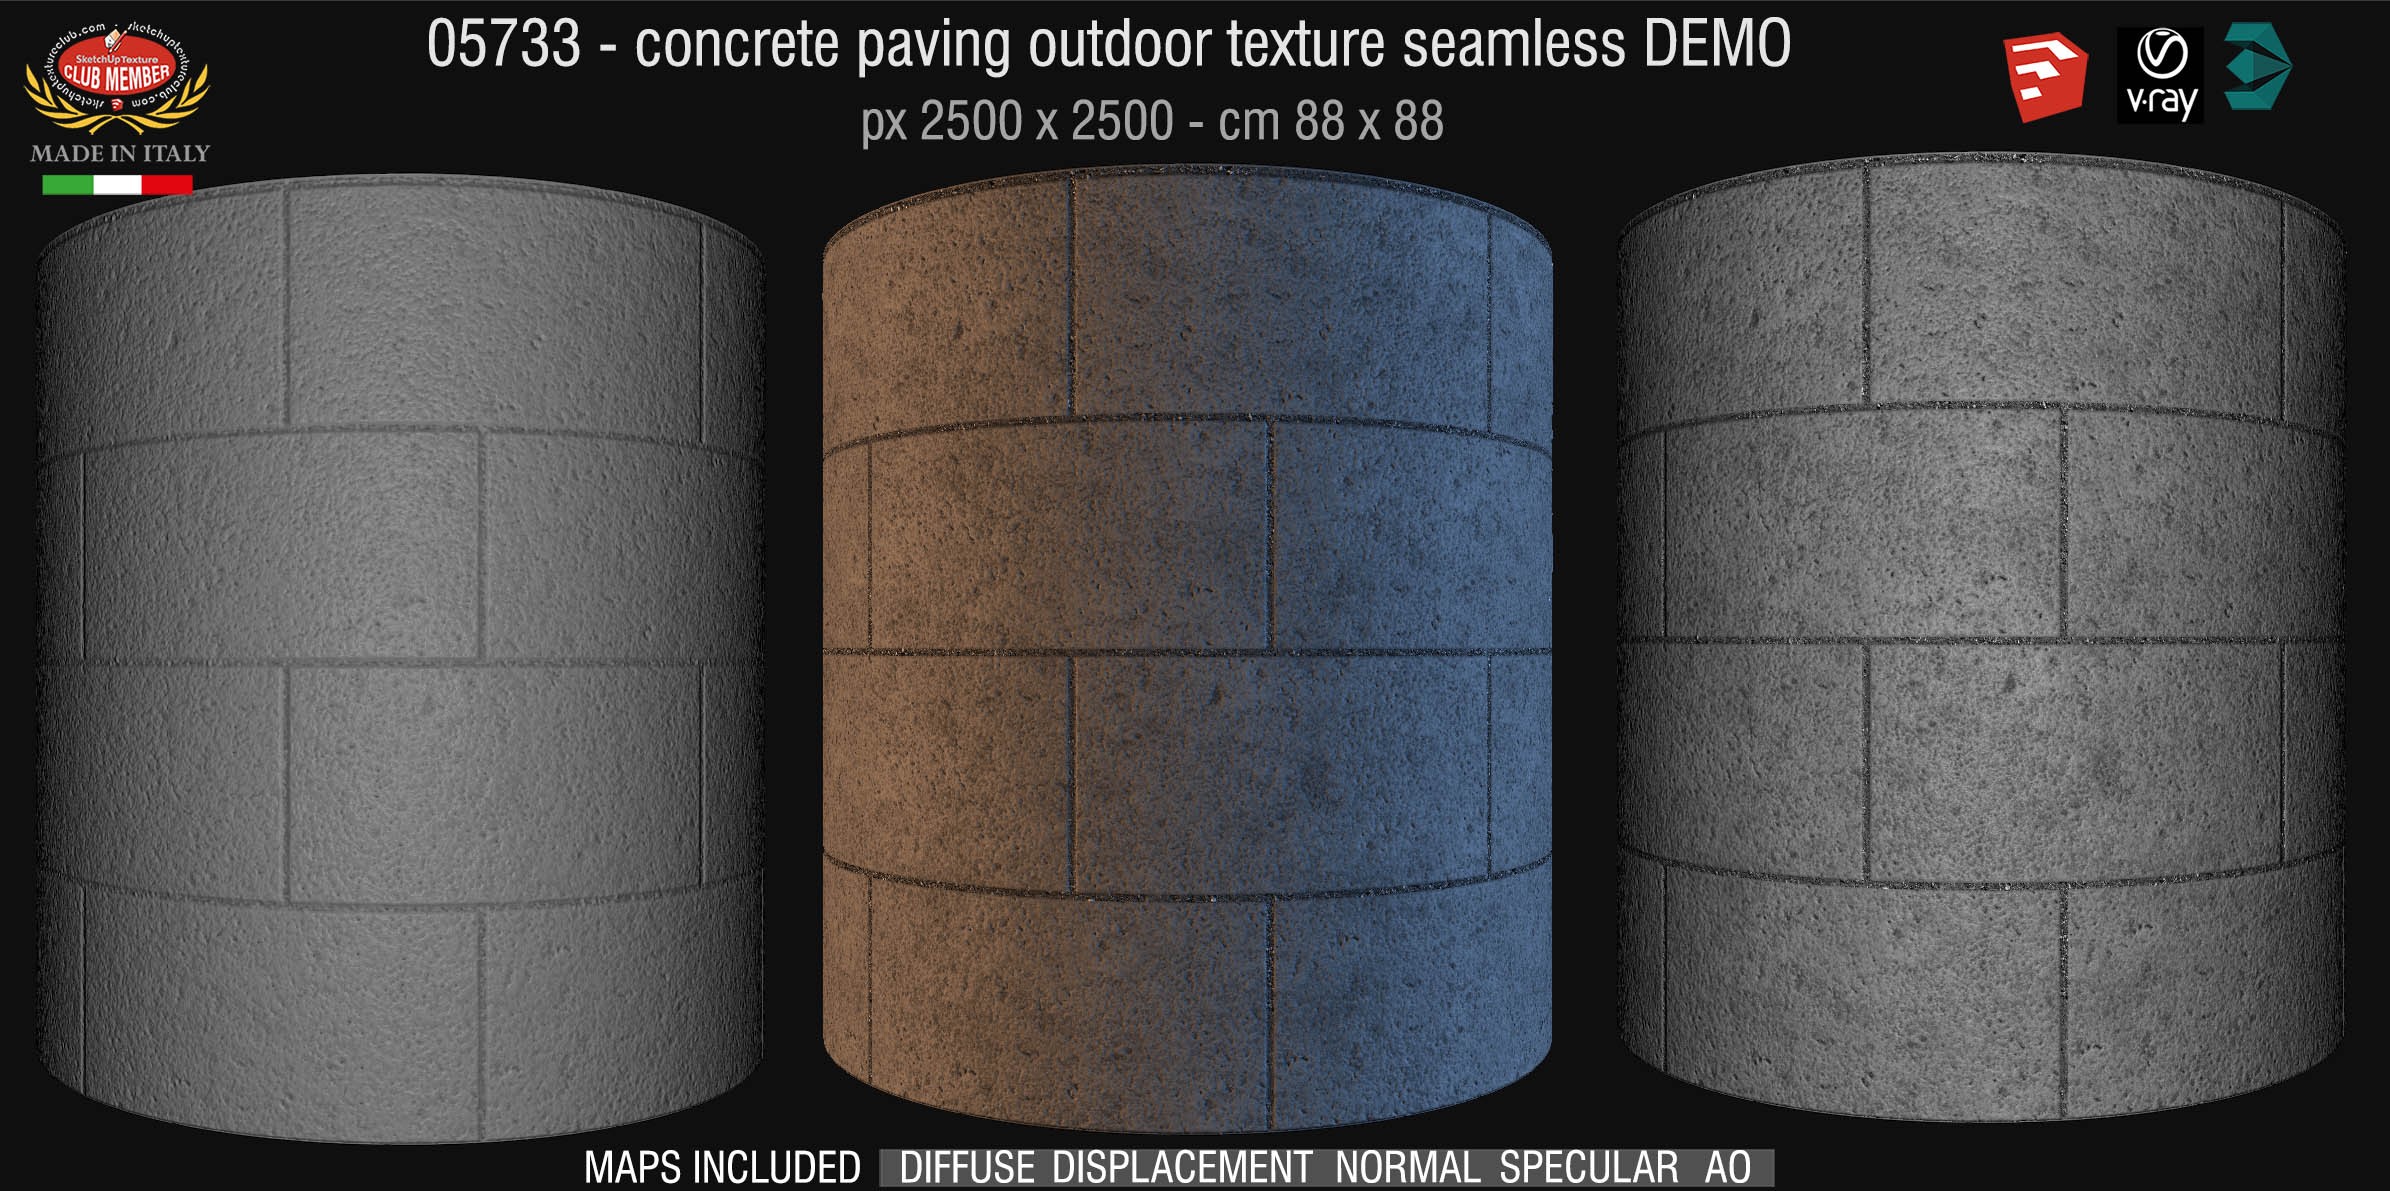 05733 HR Paving outdoor concrete regular block texture + maps DEMO